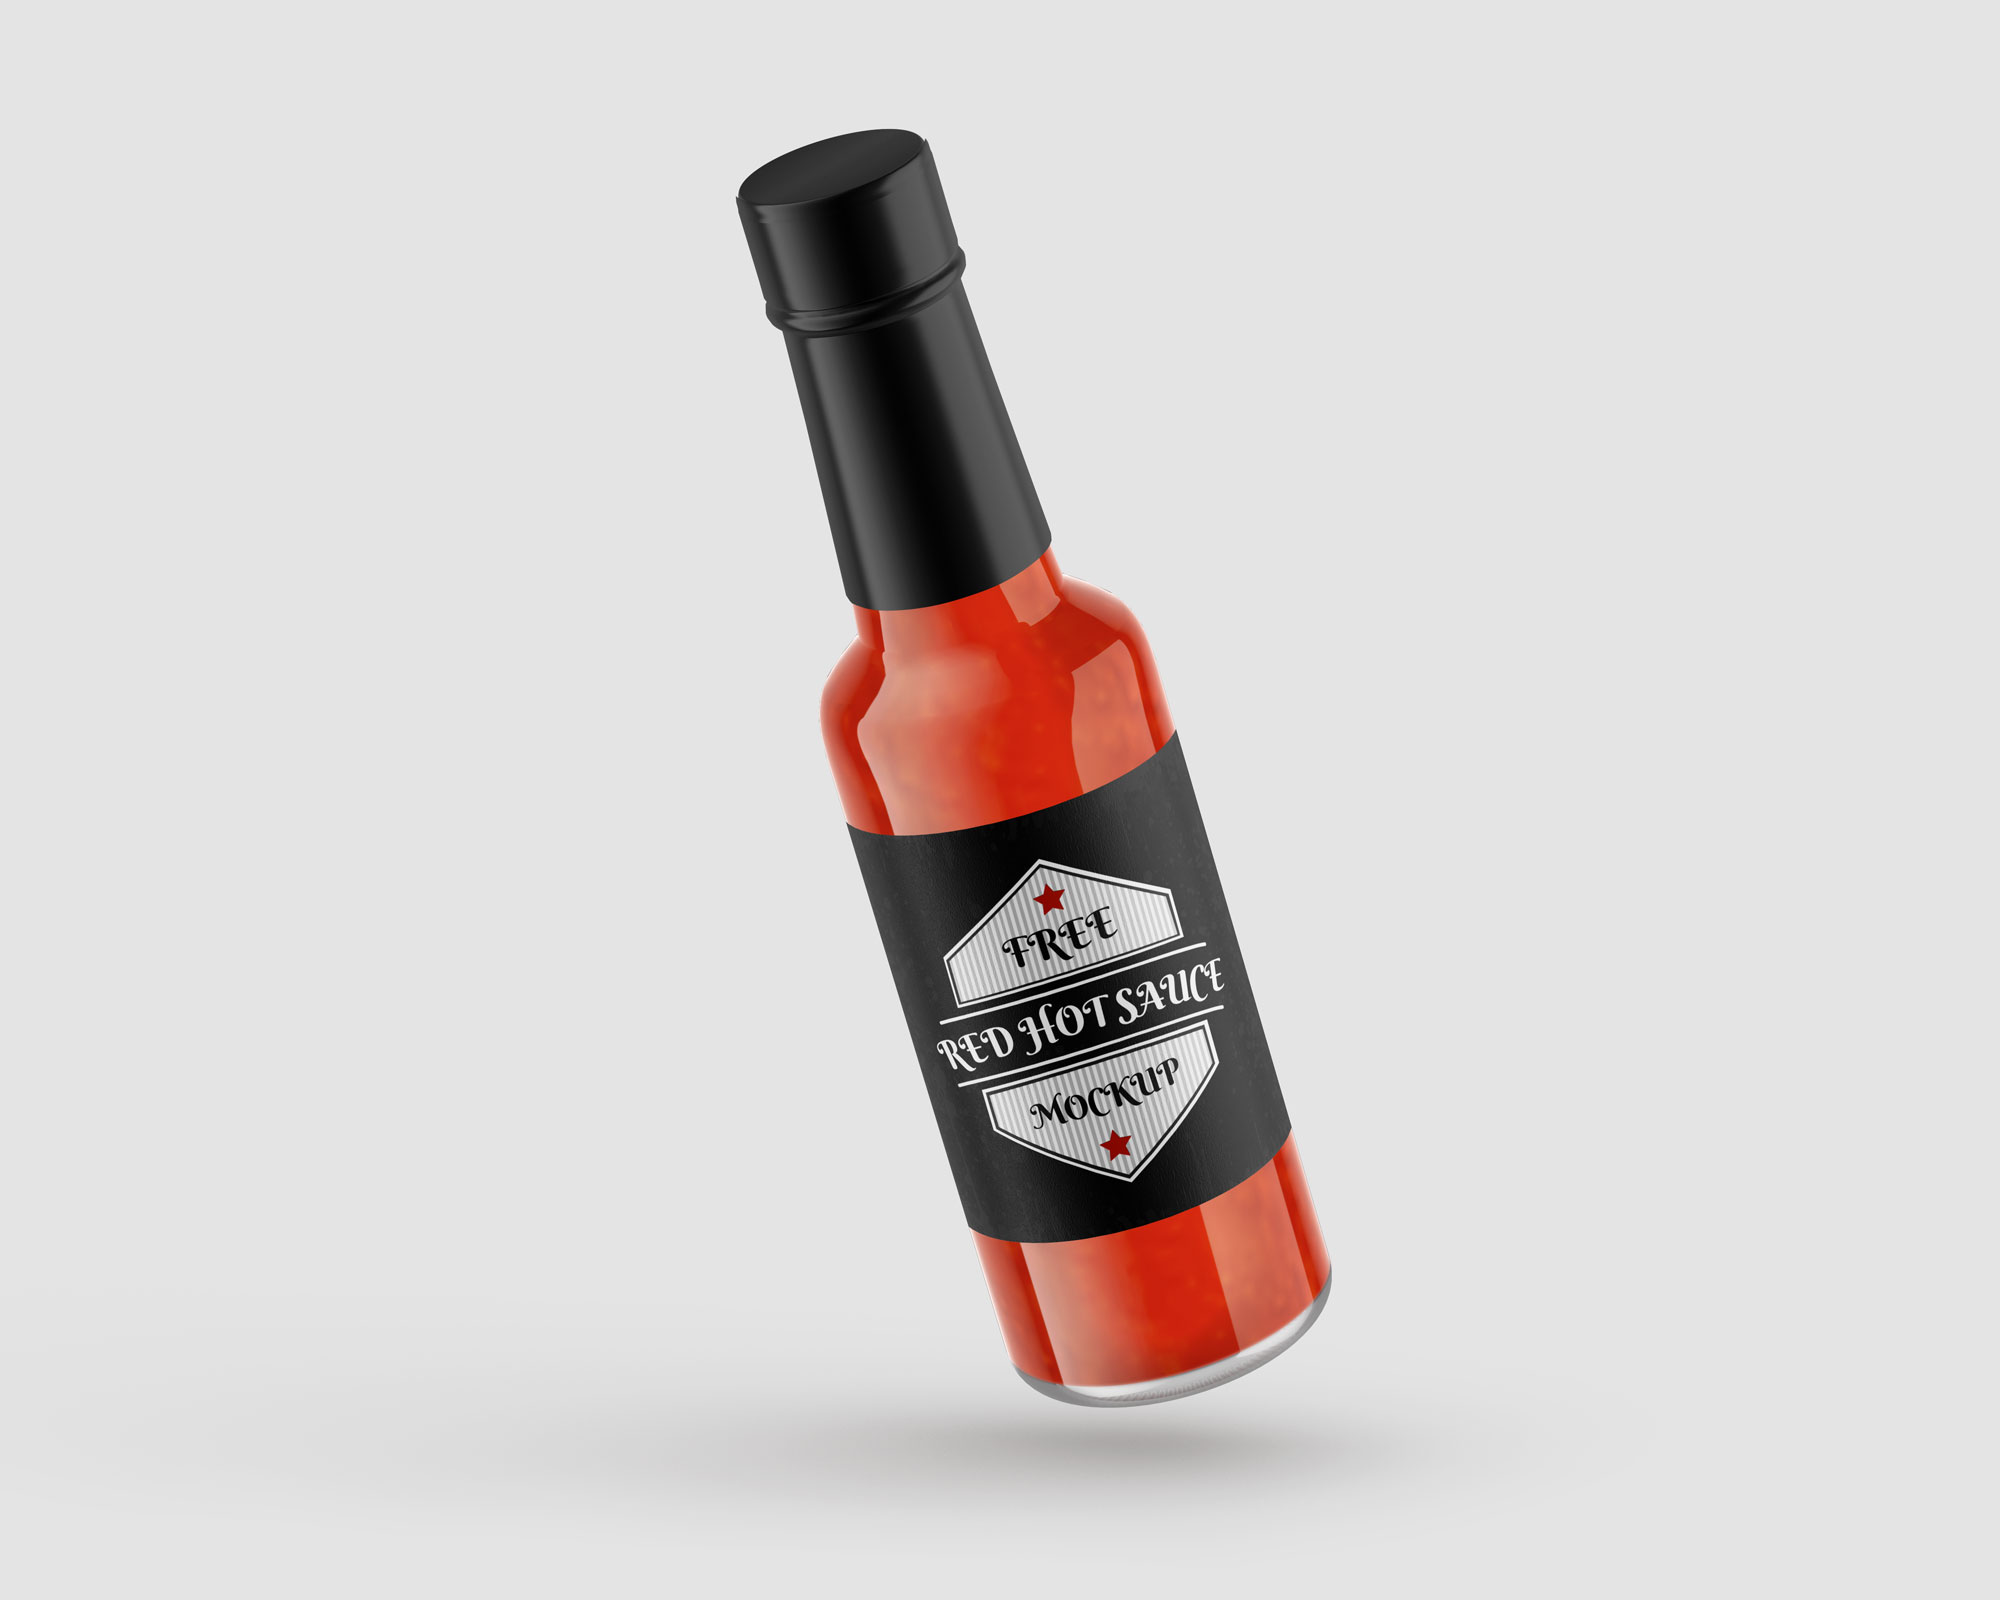 Free Red Hot Sauce Bottle Mockup2